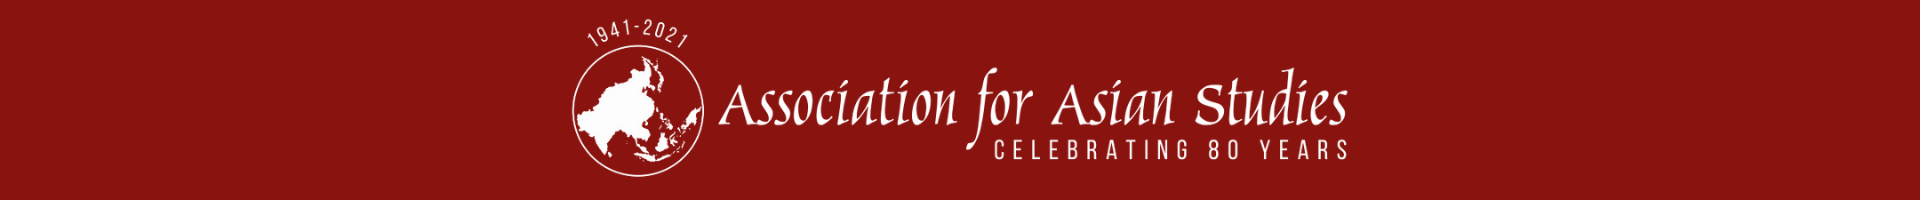 Association for Asian Studies Celebrating 80 Years, 1941-2021